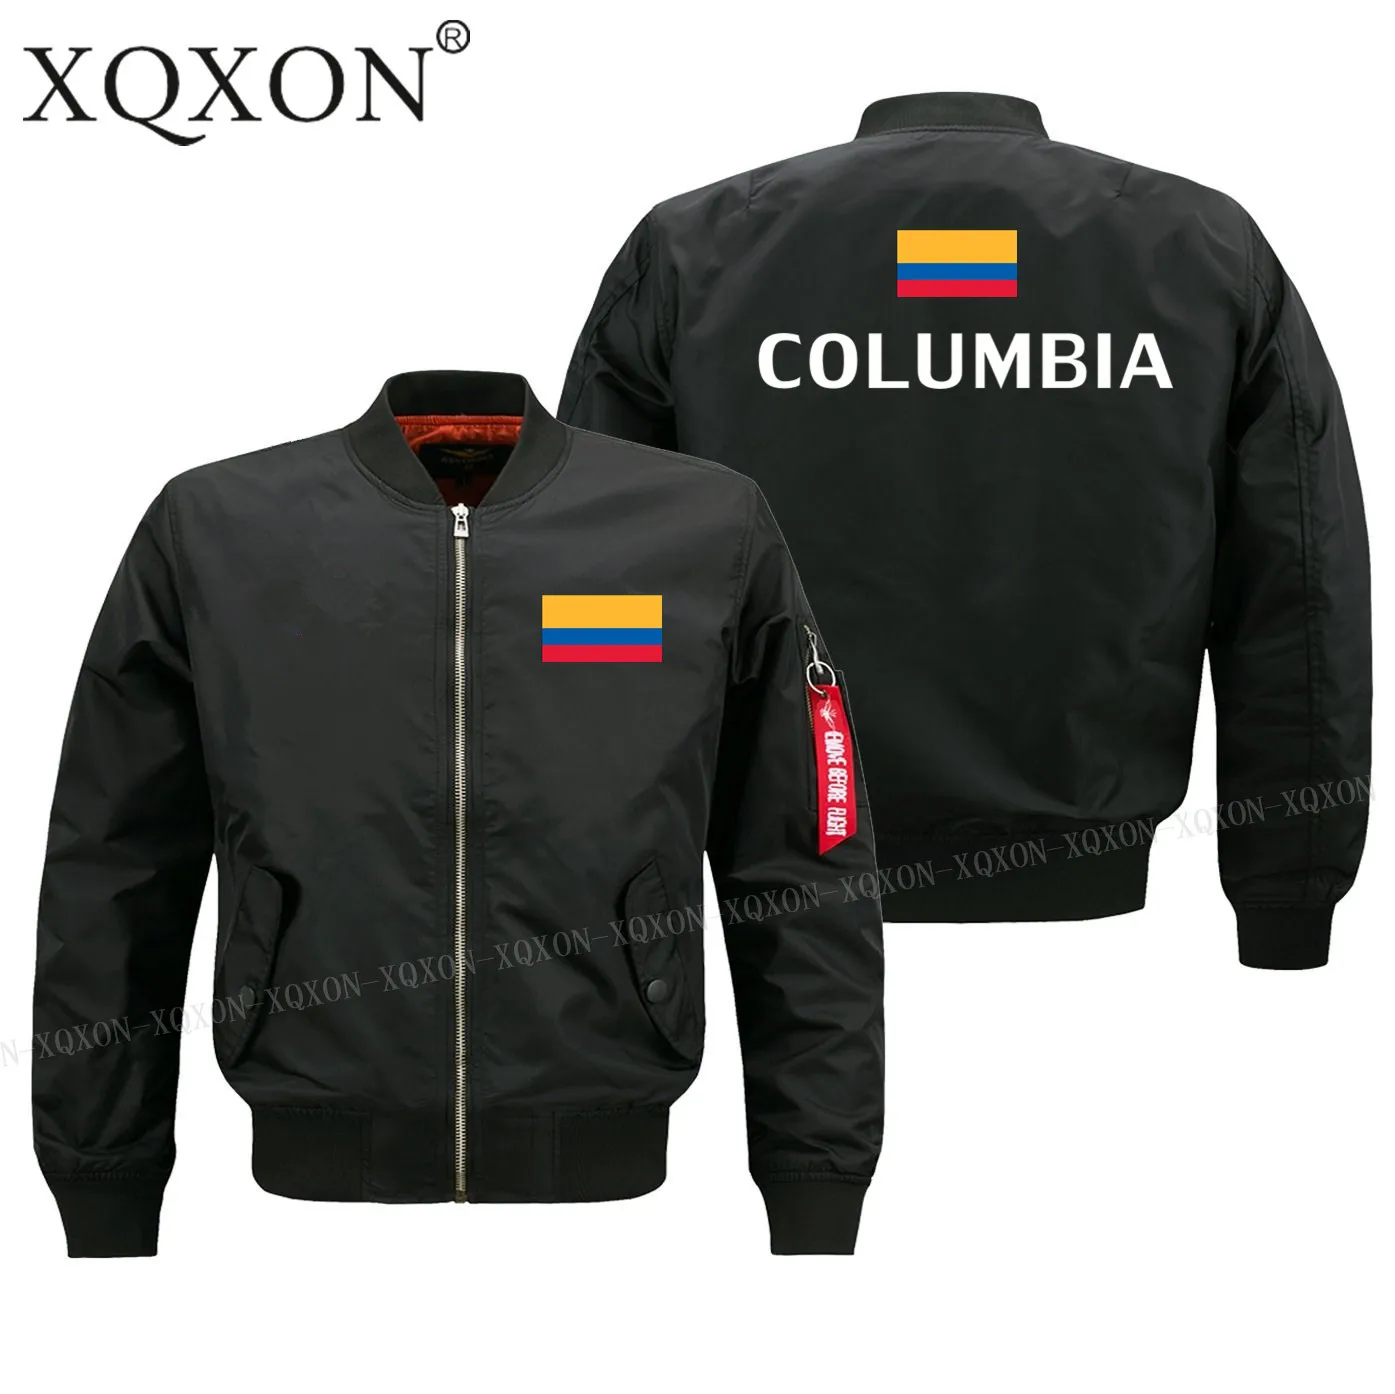 XQXON 2018 new funny Military pilot man Coats Jackets hot